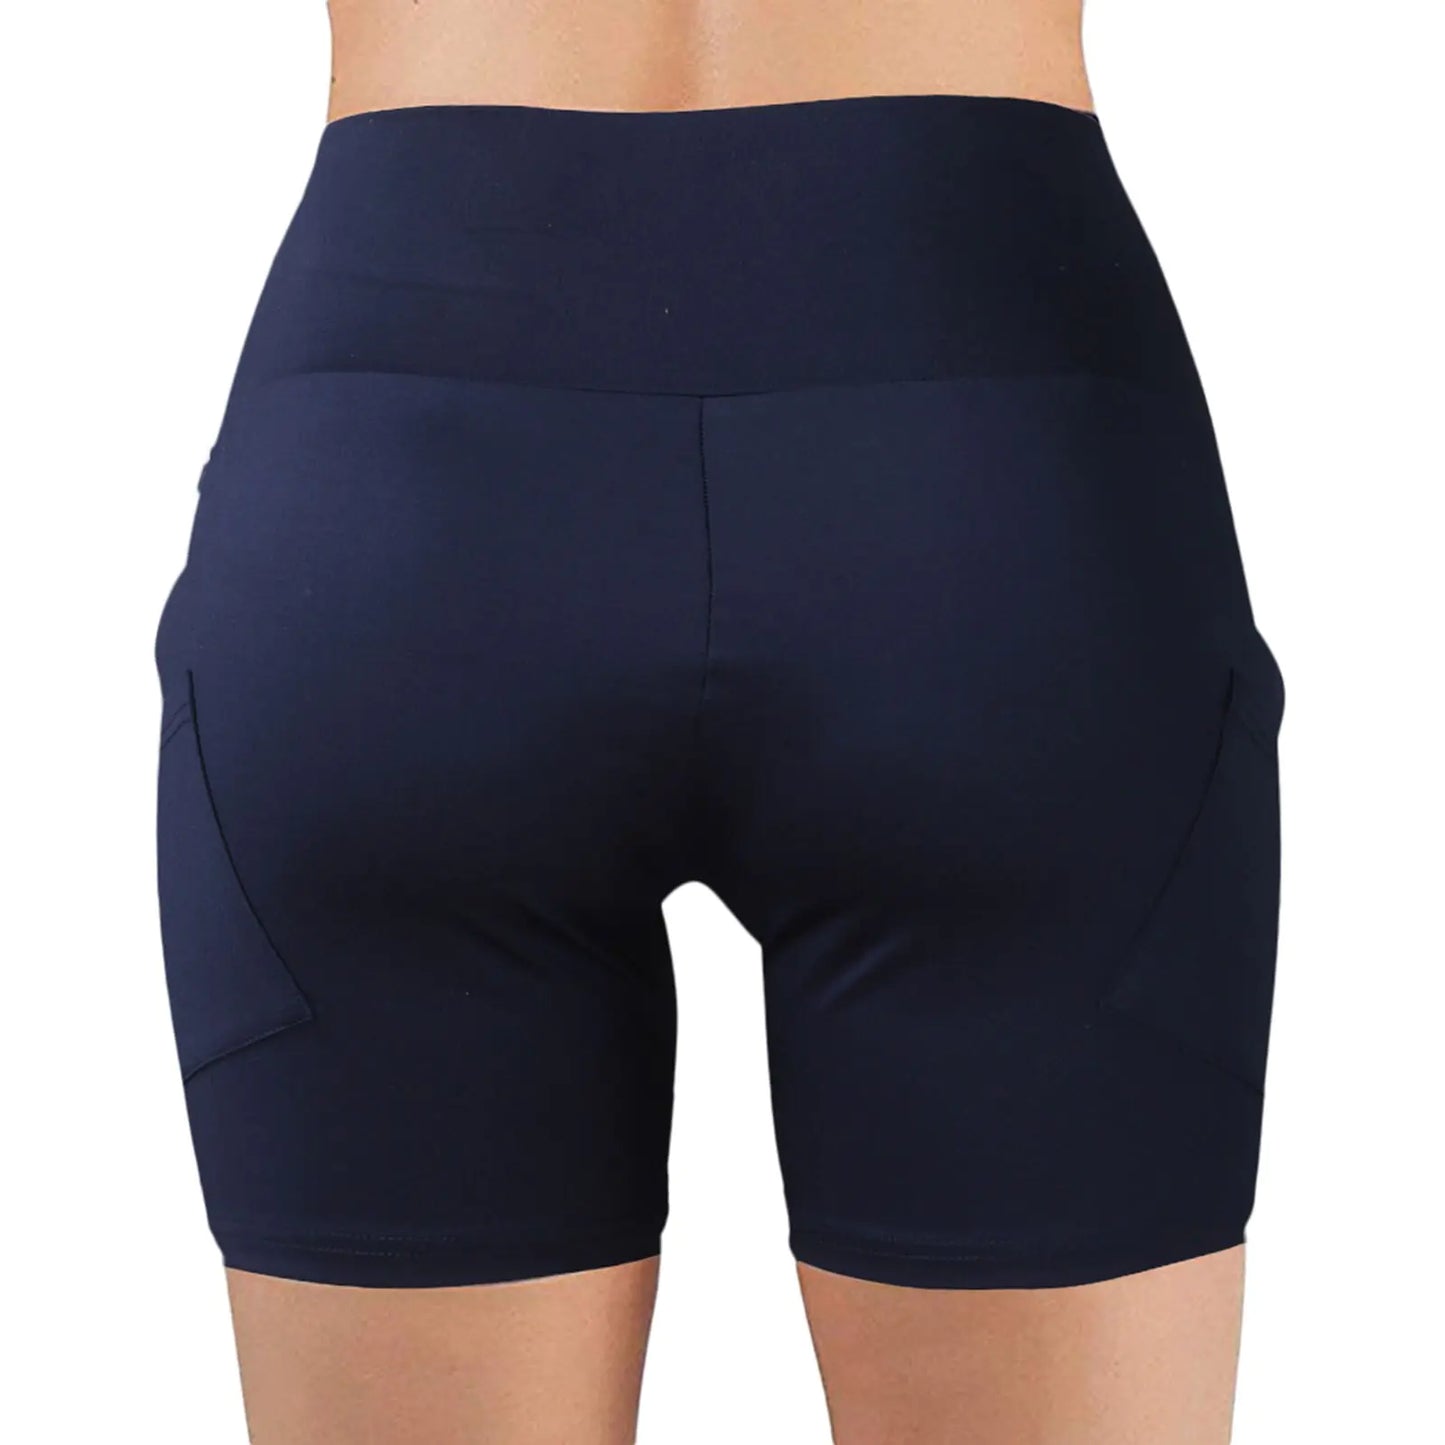 Women's Winquick Quick Dry Shorts